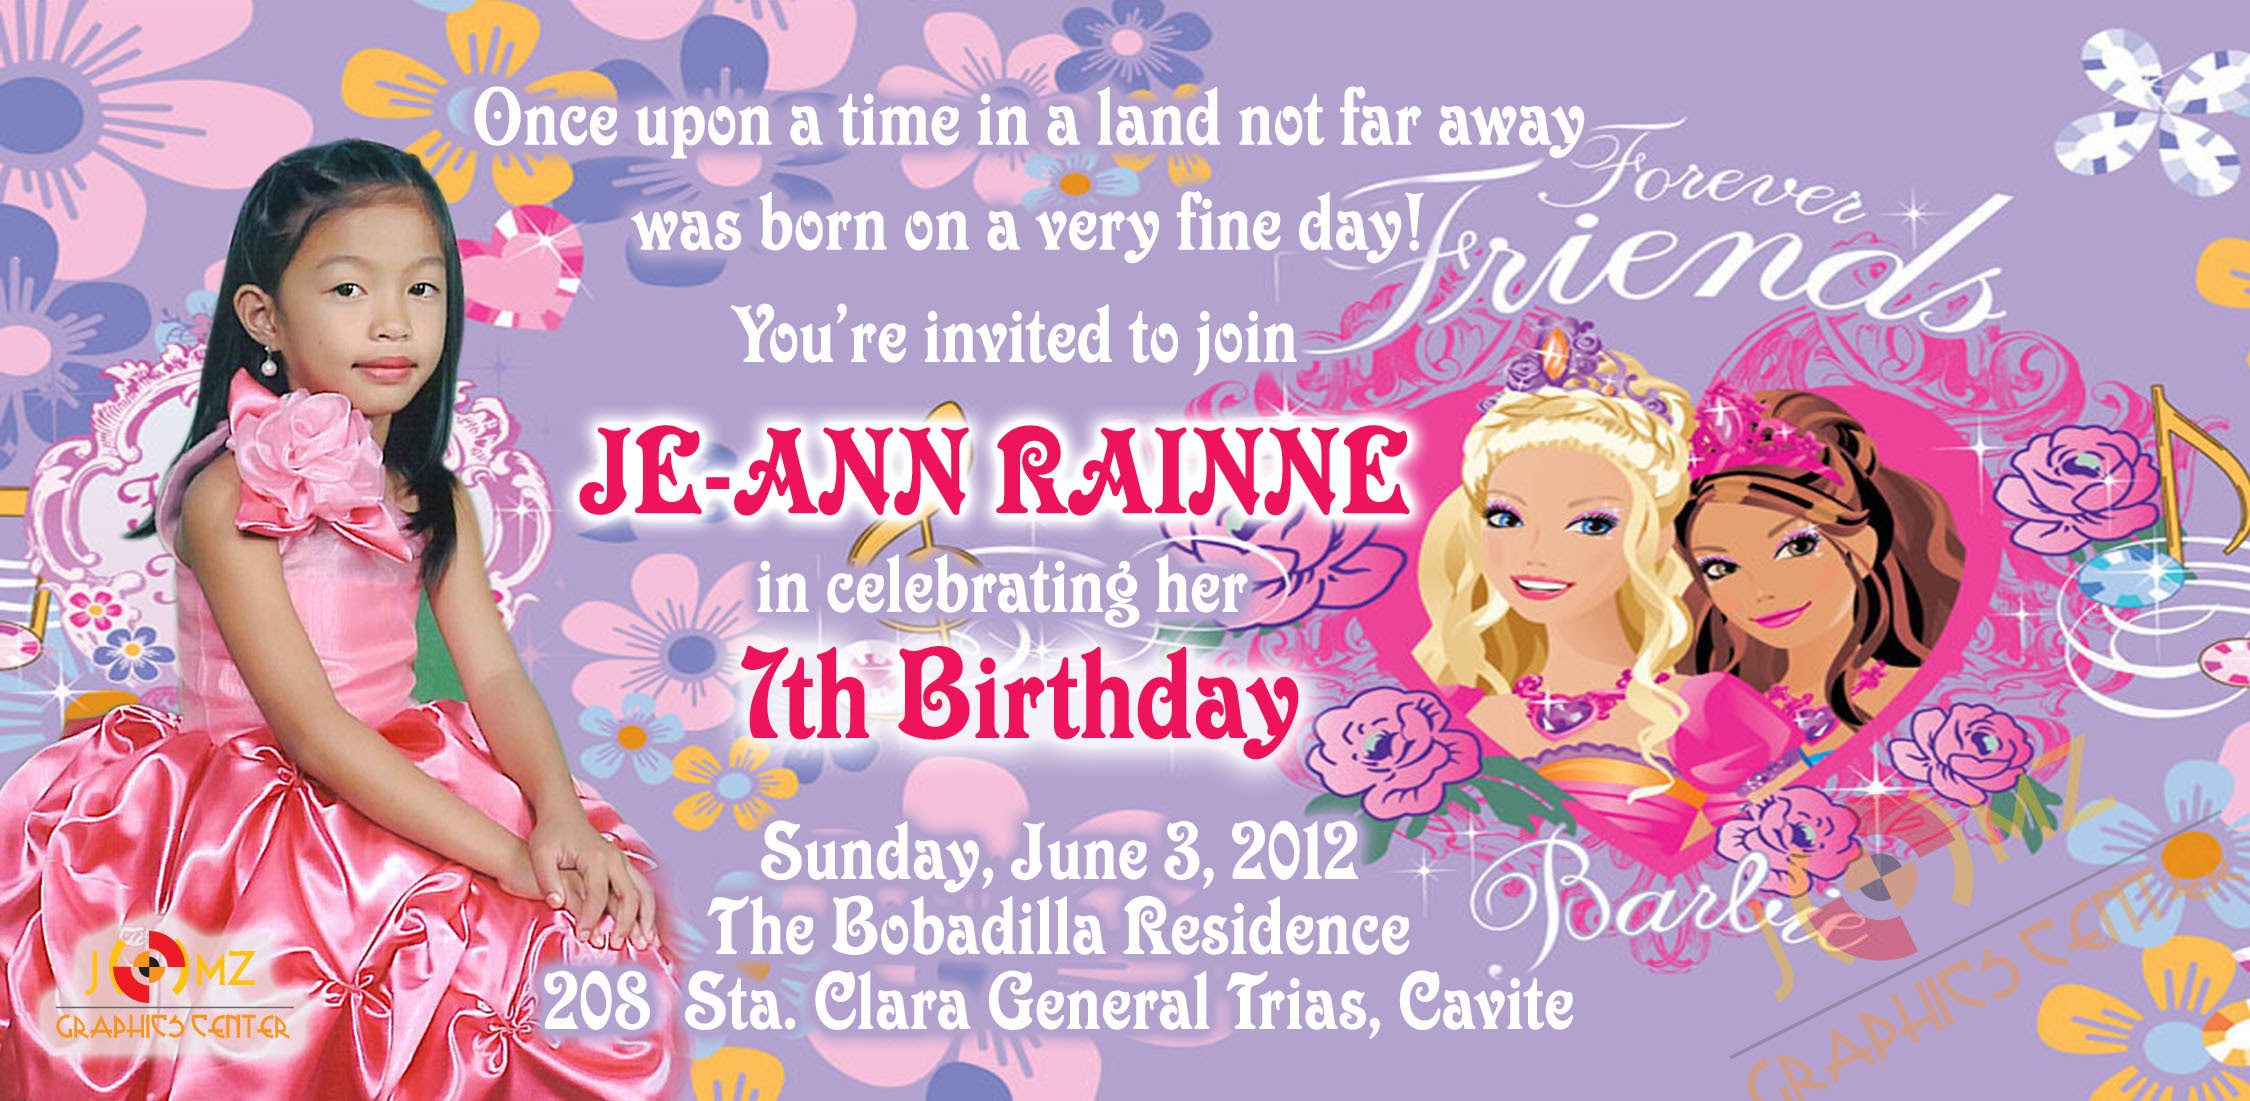 7th birthday barbie invitation card